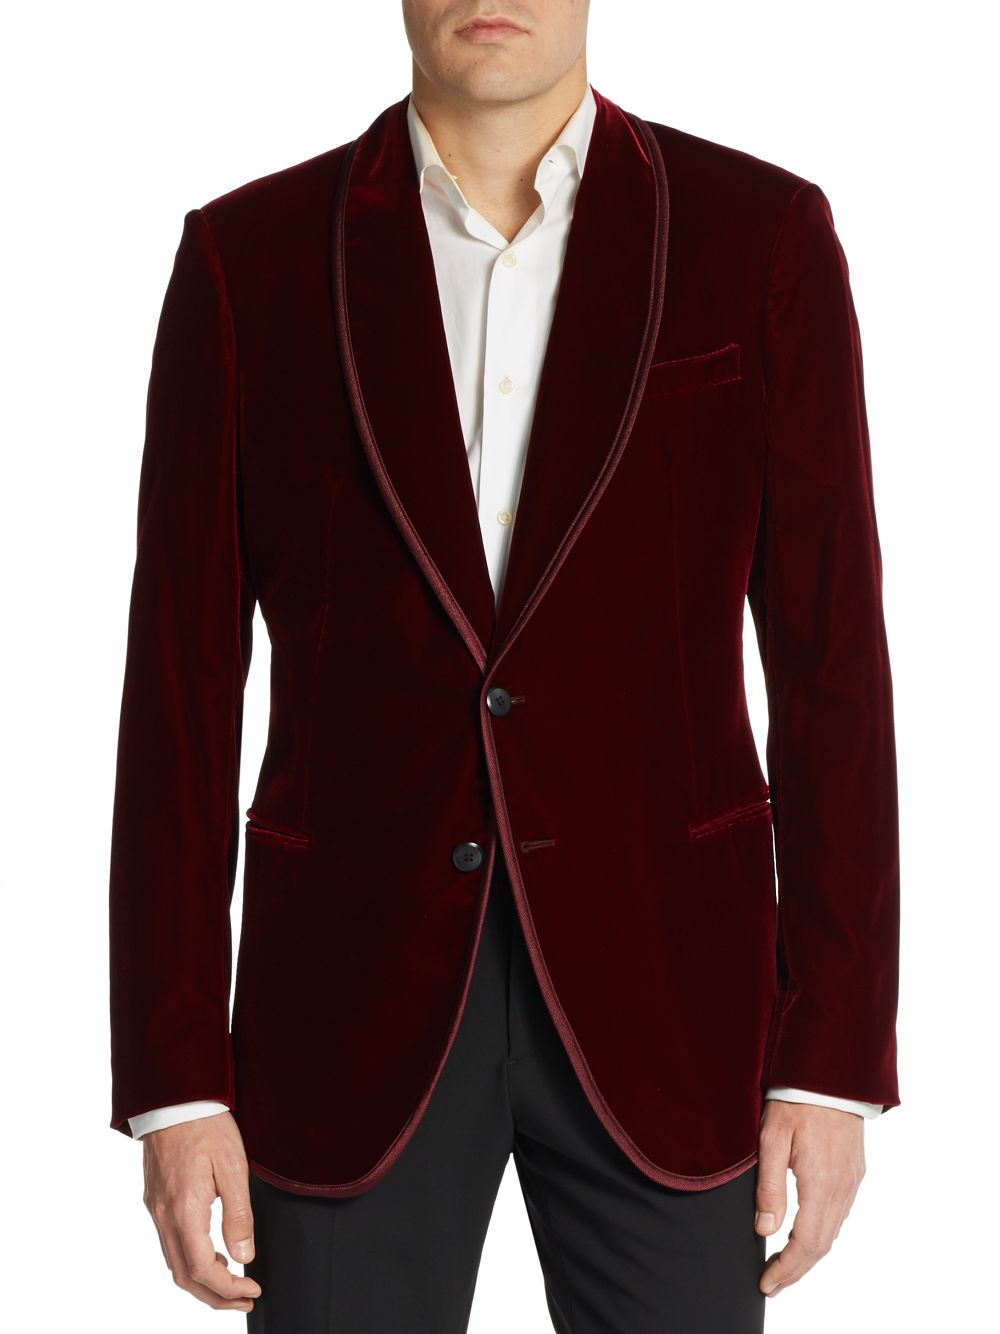 Giorgio Armani Cambridge Velvet Regular-Fit Jacket in Red for Men - Lyst